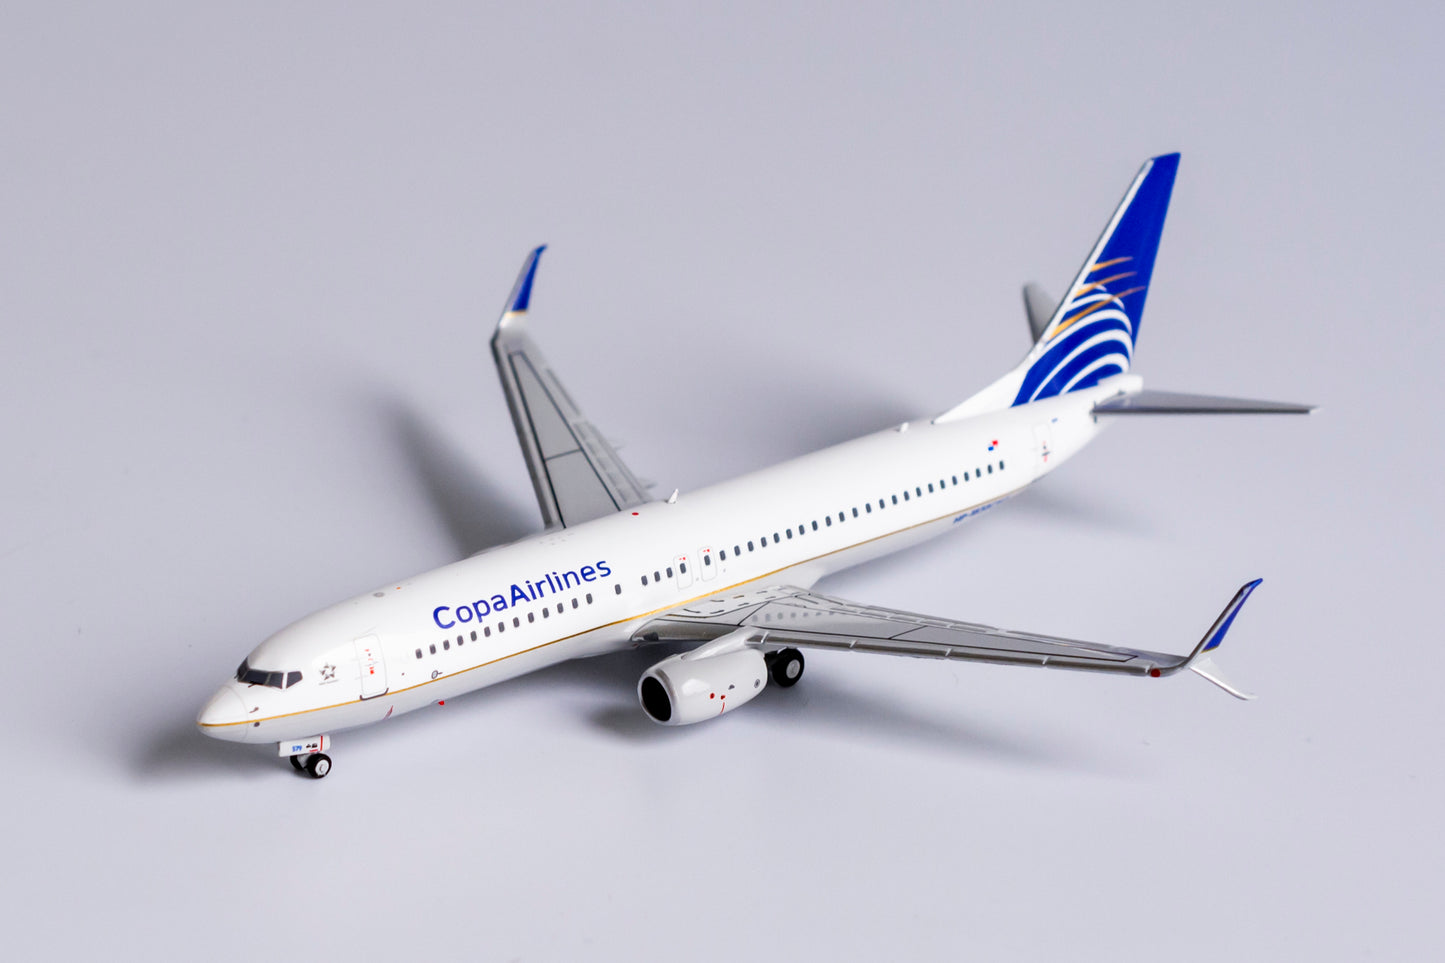 1:400 NG Models Copa Airlines Boeing 737-800 "Split Scimitars" HP-1538CMP NG58108